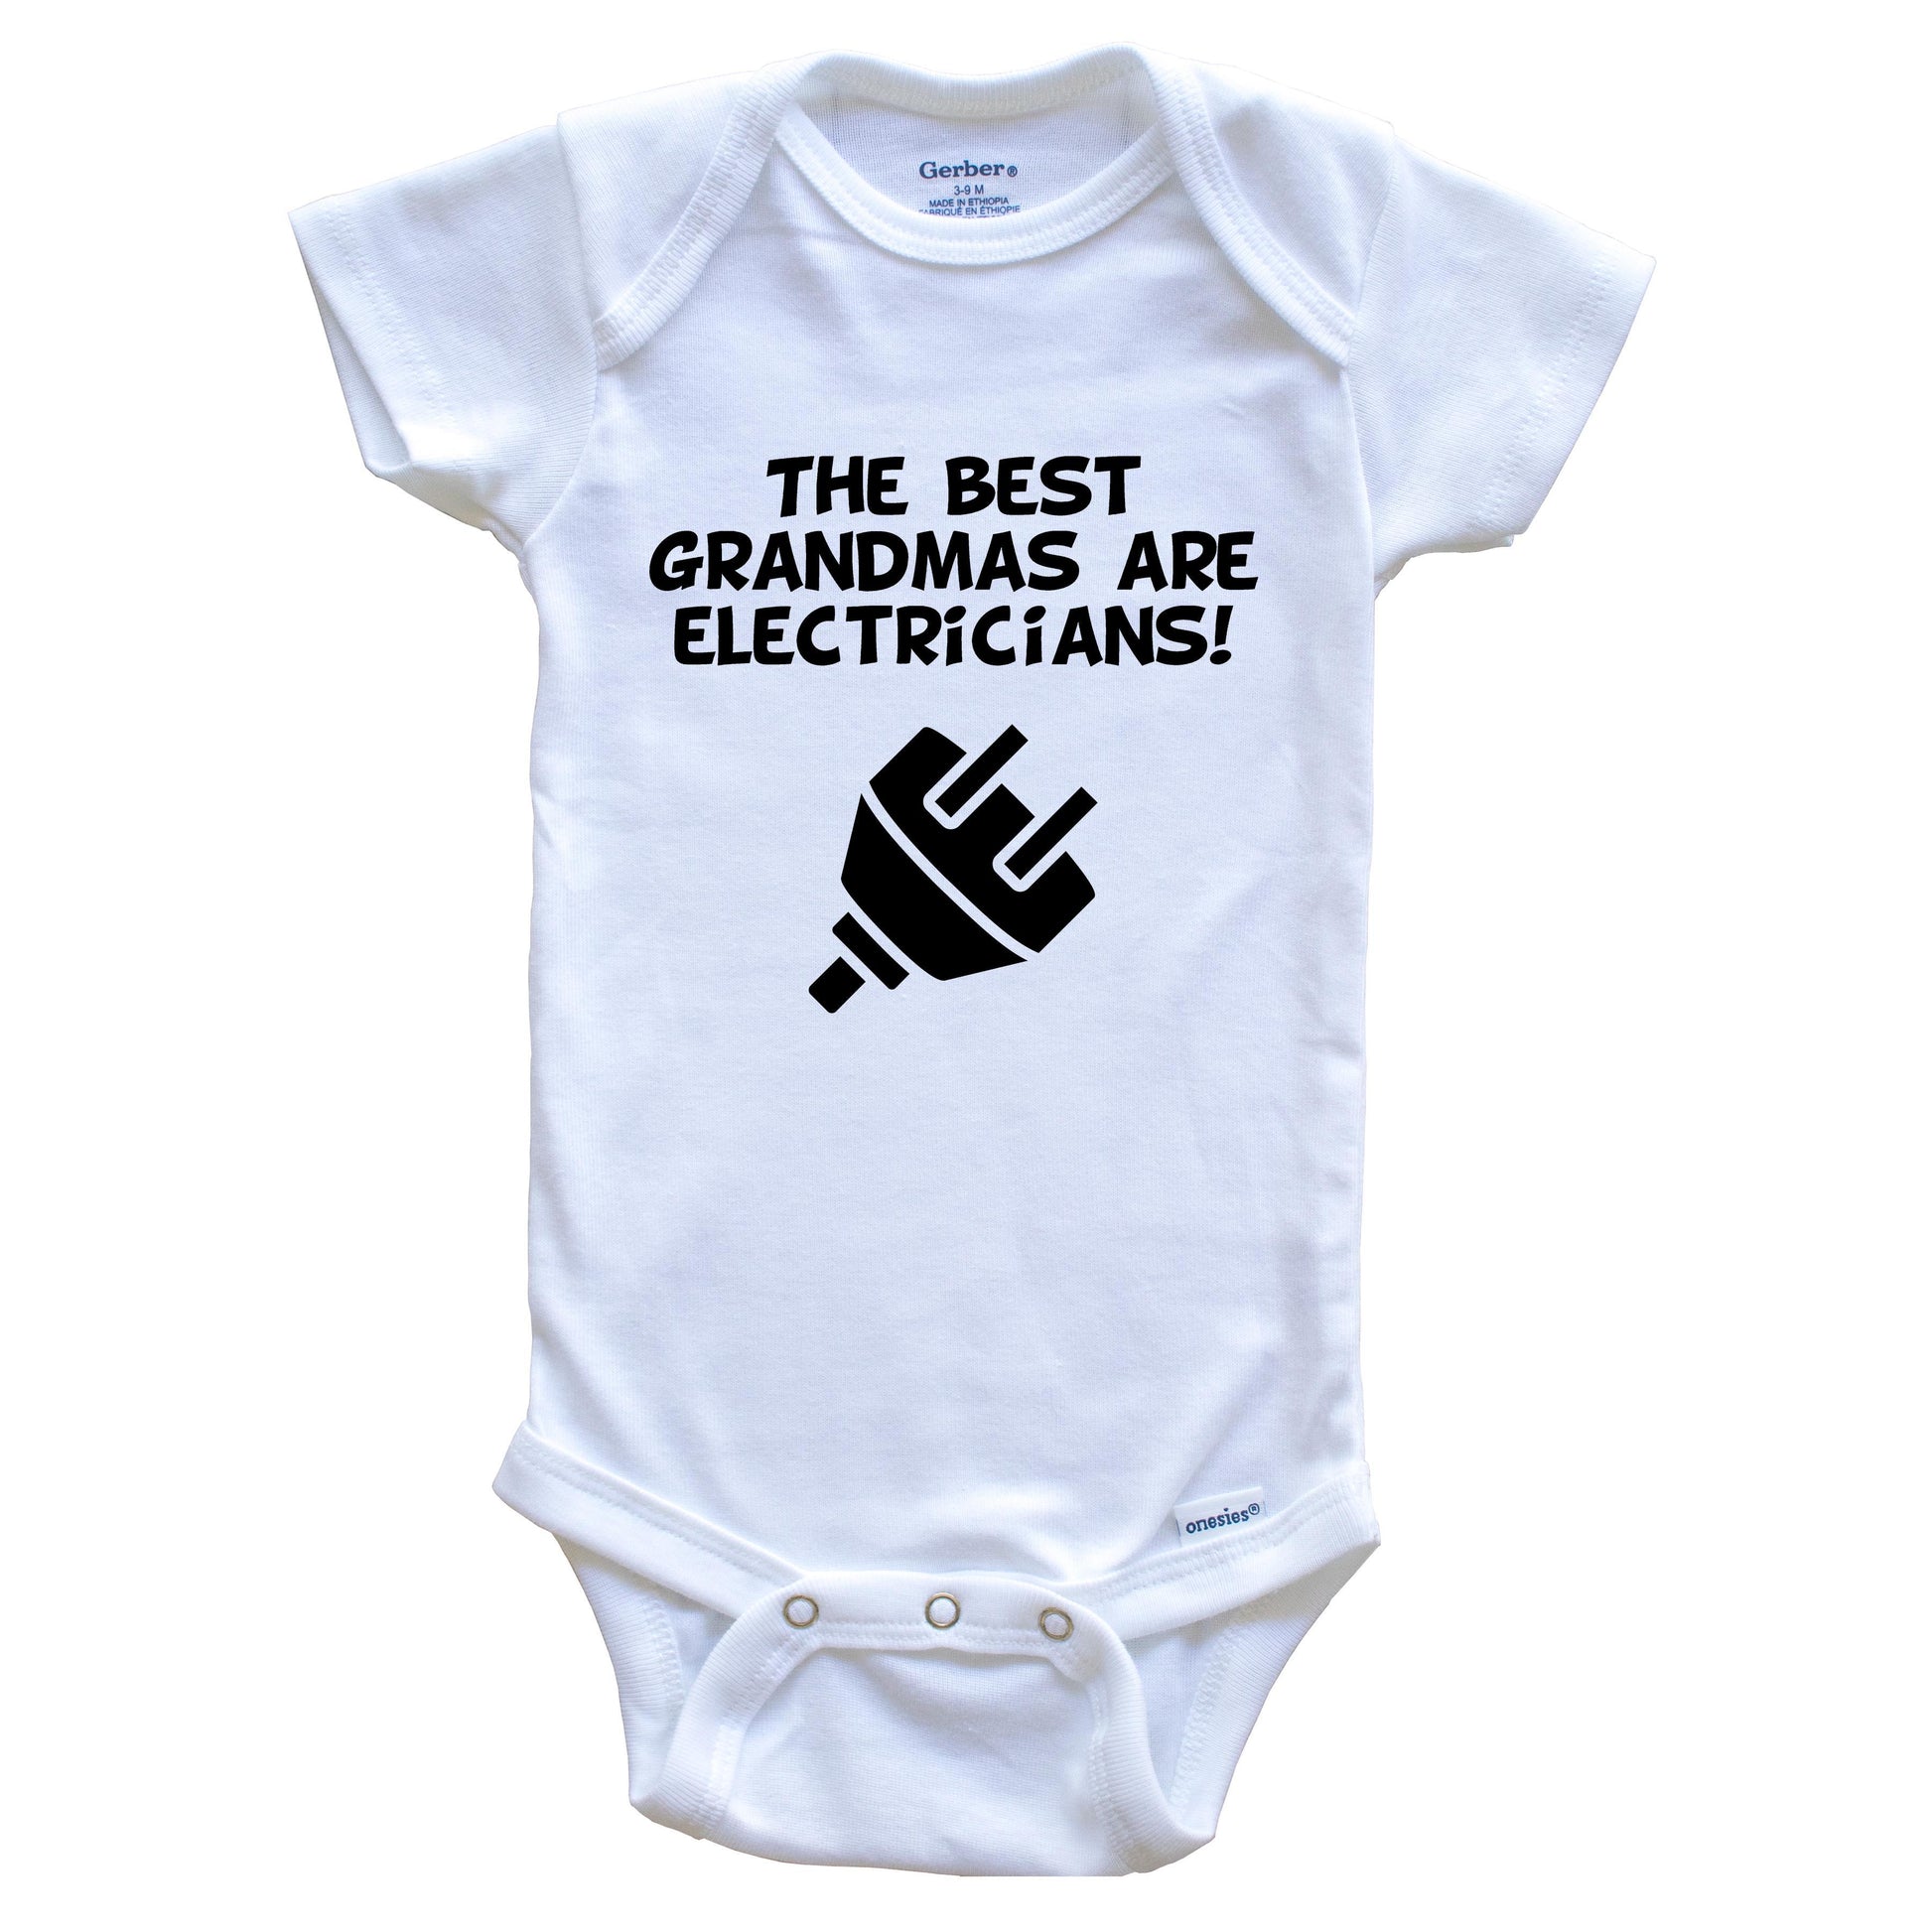 The Best Grandmas Are Electricians Funny Grandchild Baby Onesie